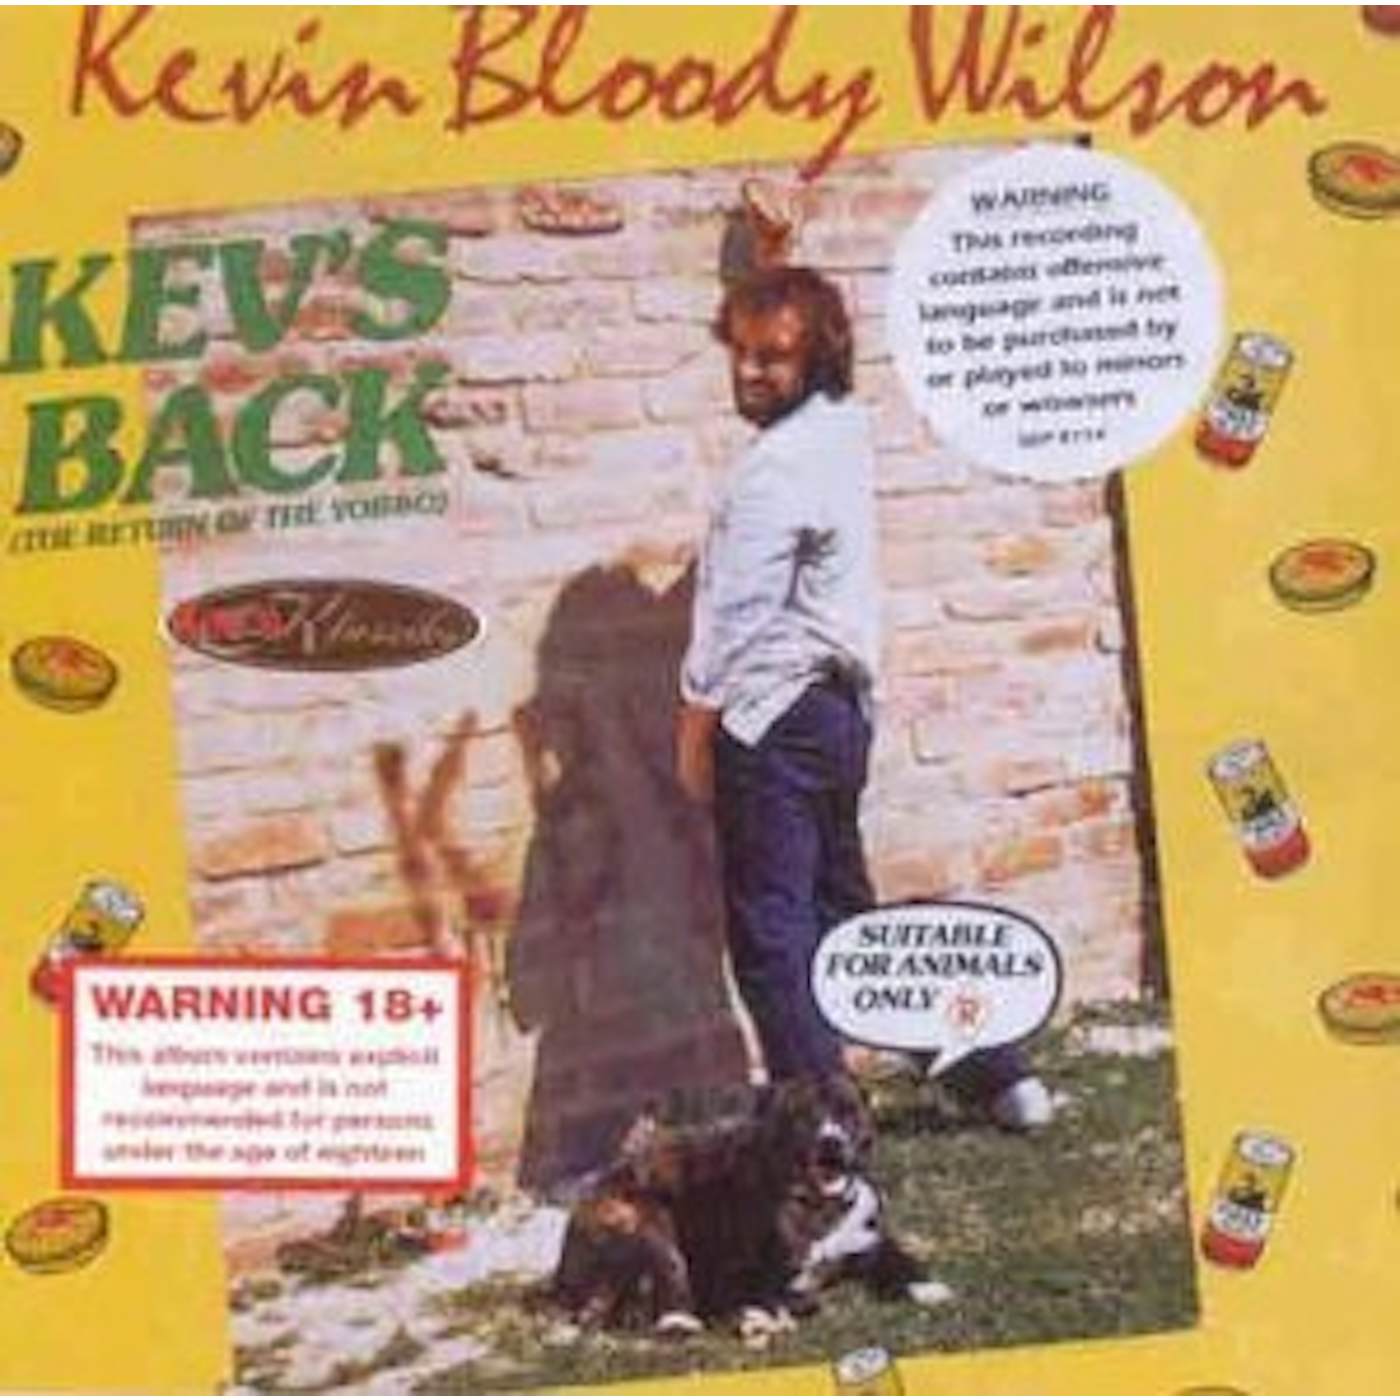 Kevin Bloody Wilson KEV'S BACK CD